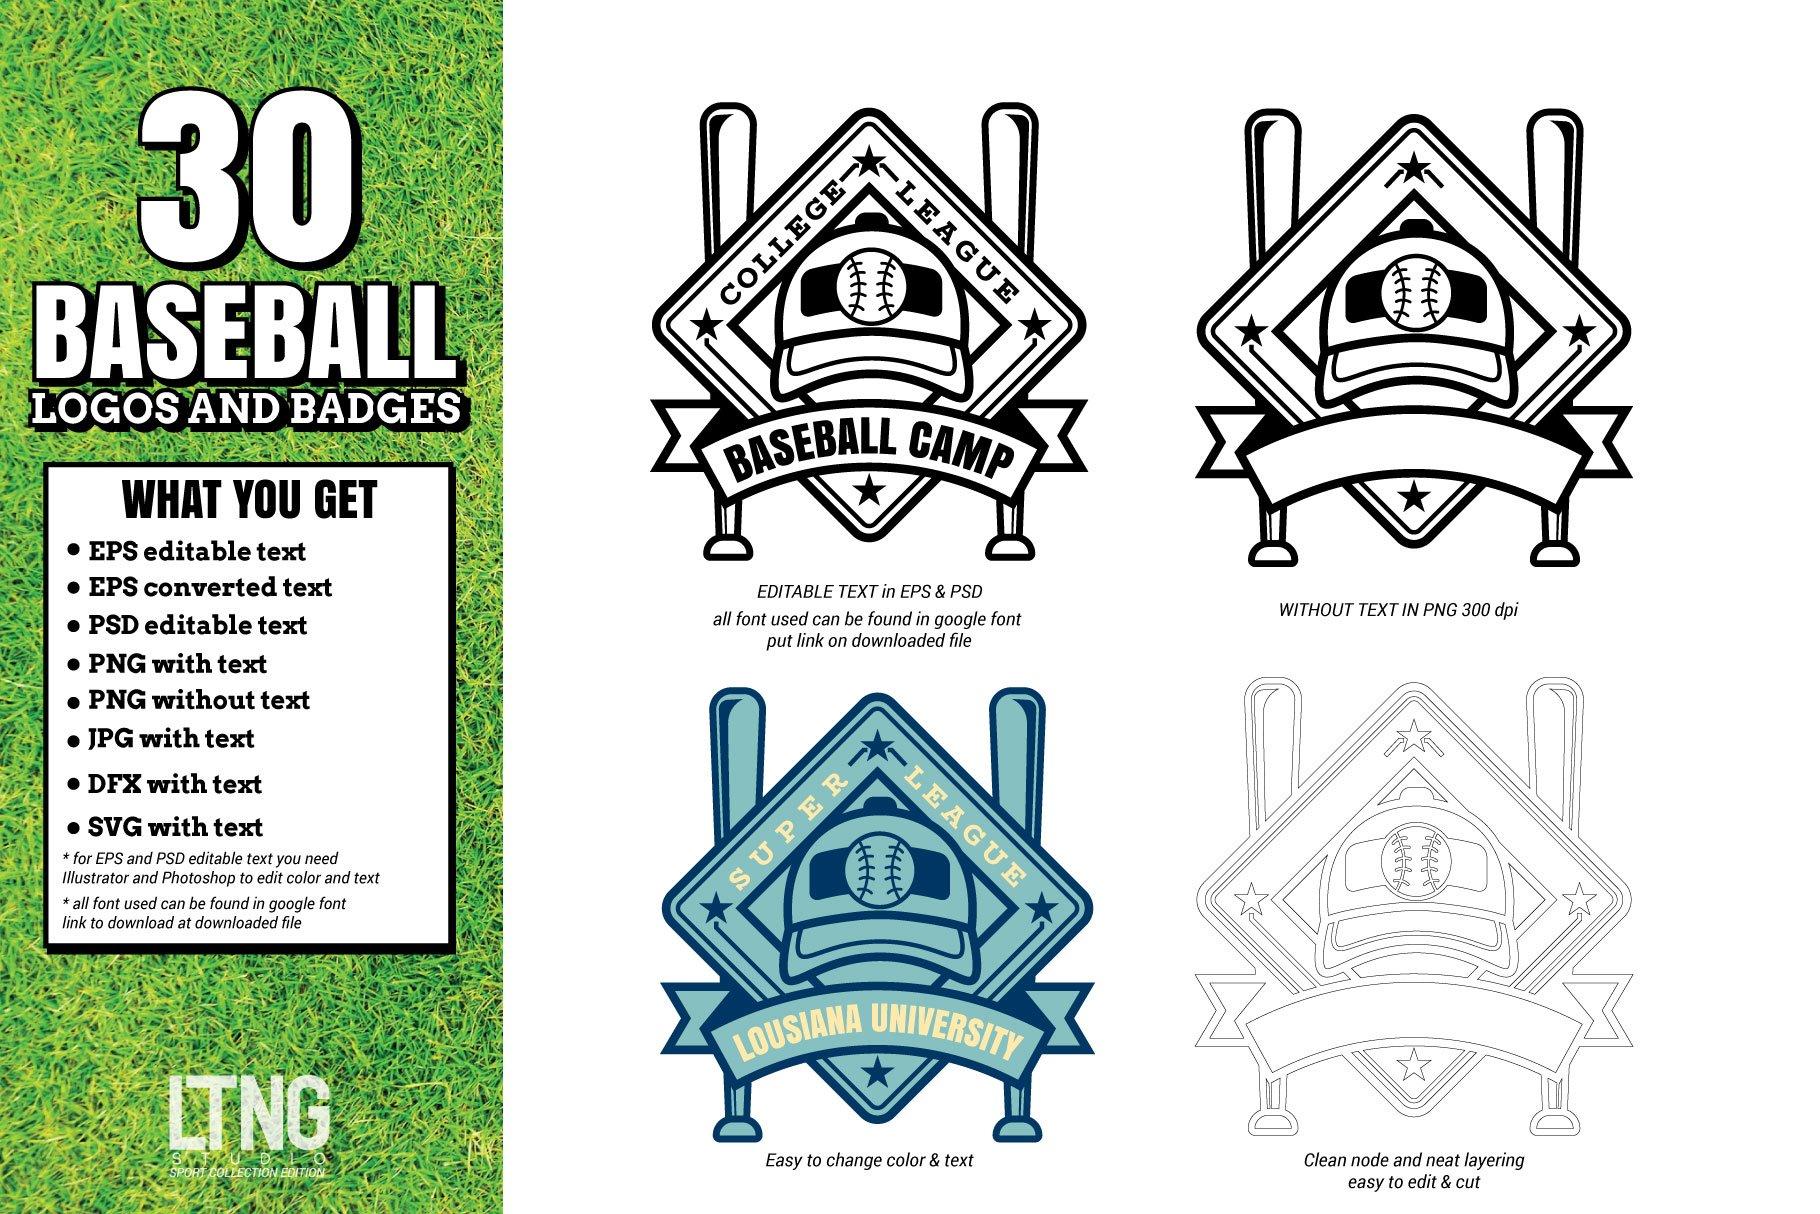 30 Baseball logos and badges preview image.